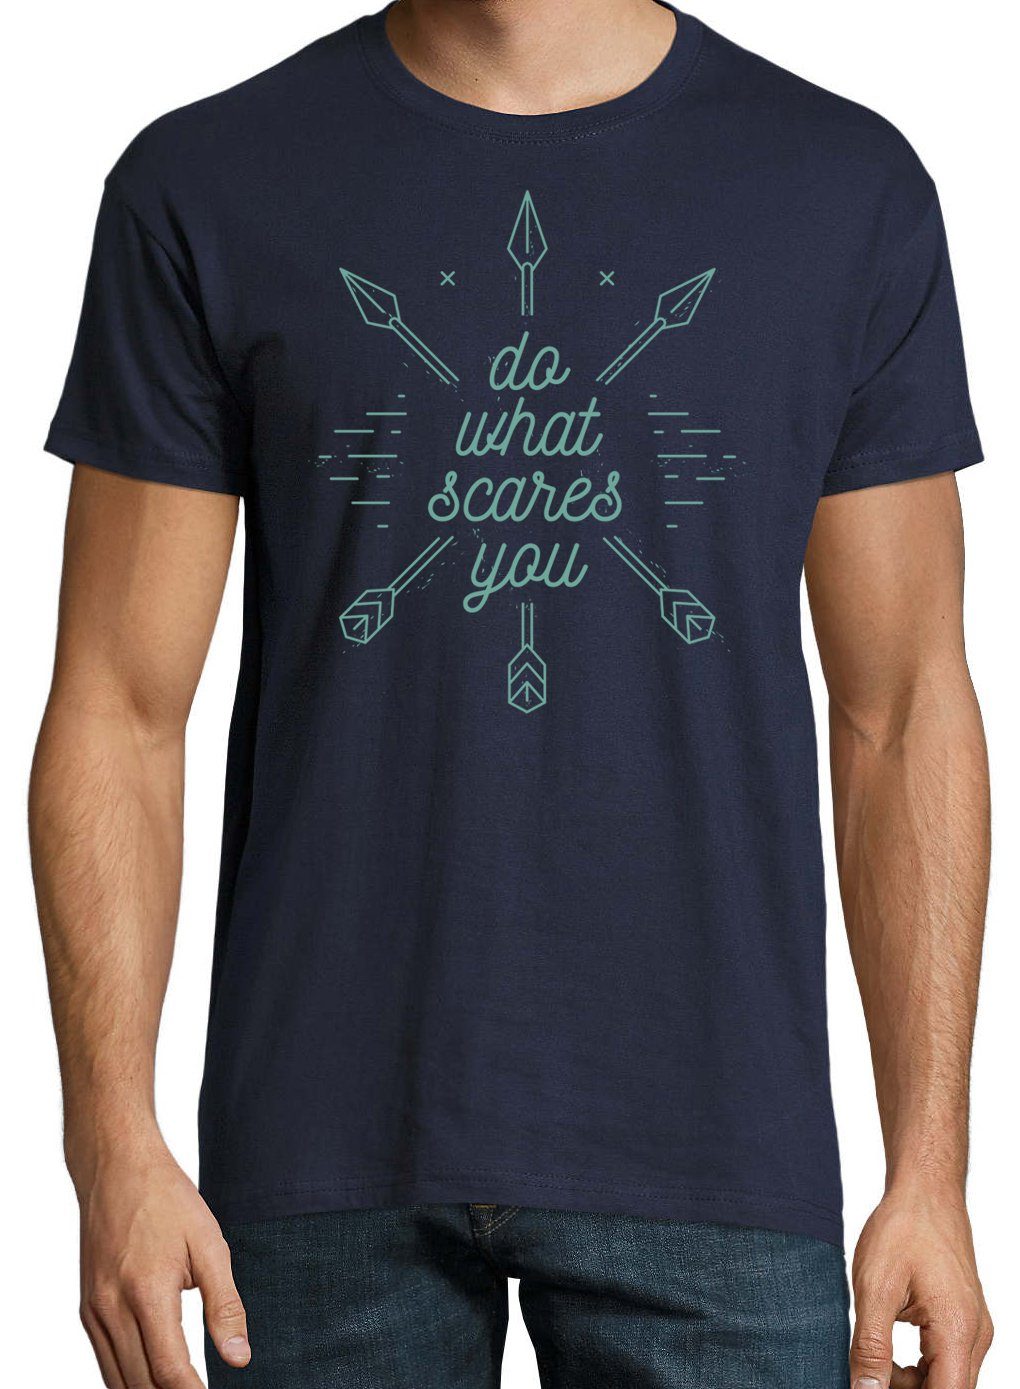 Scares "Do mit Shirt You" What Youth Herren Frontprint Designz Navyblau trendigem T-Shirt